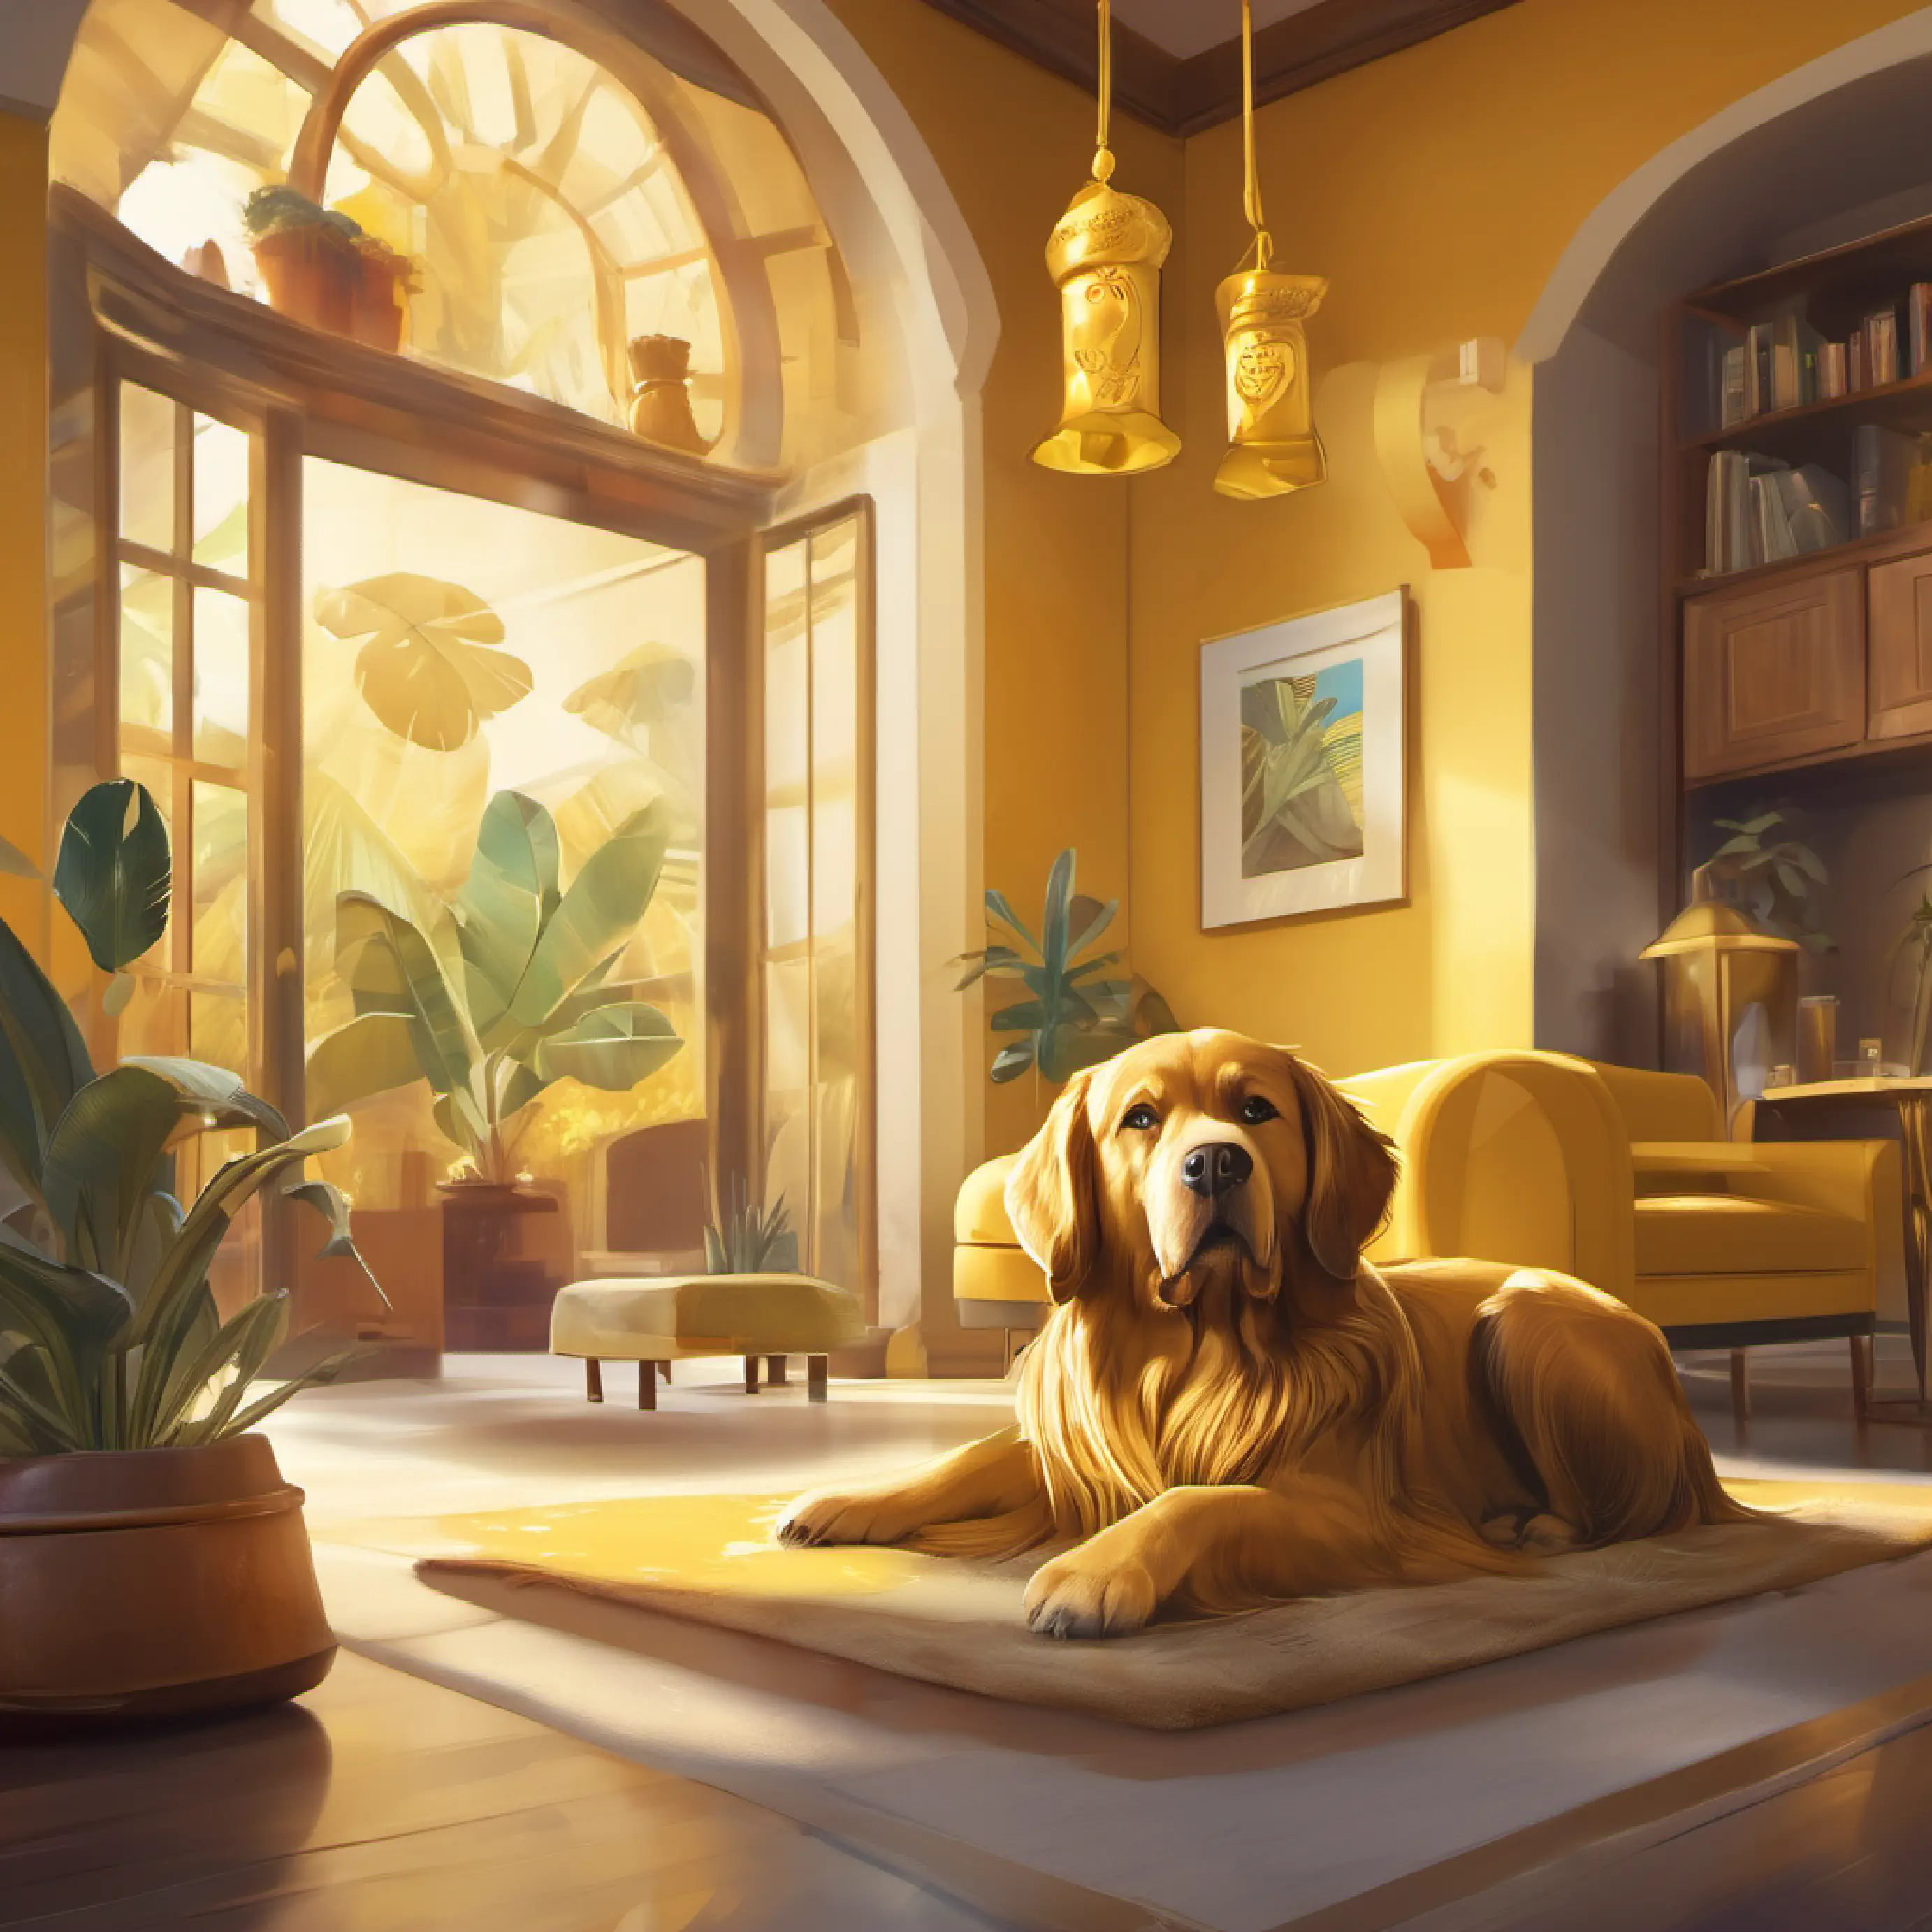 Description of Golden coat, loves bananas, smart dog and his home.